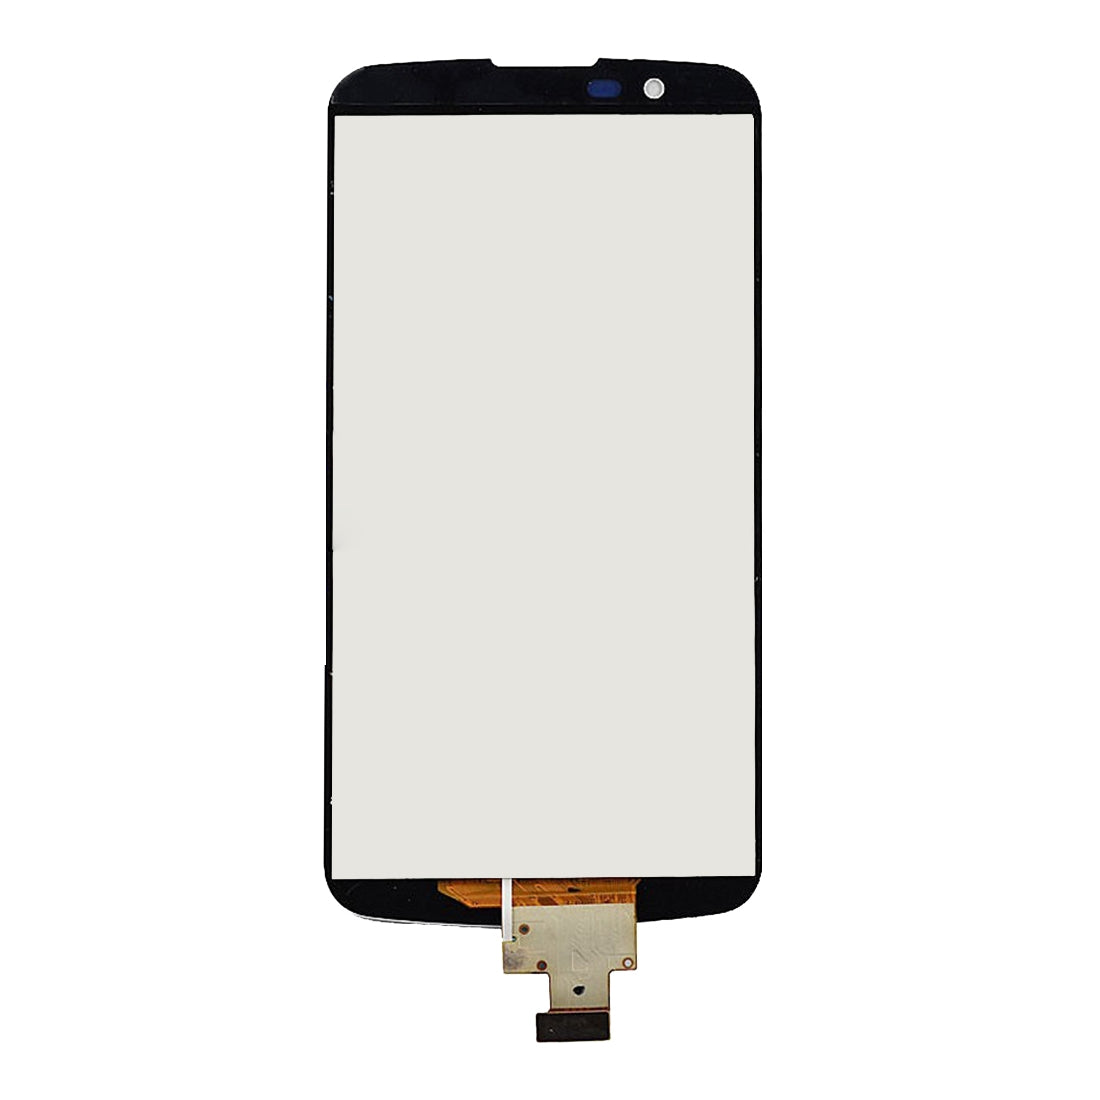 Pantalla LCD + Tactil Digitalizador LG K10 Lte K10 2016 Blanco